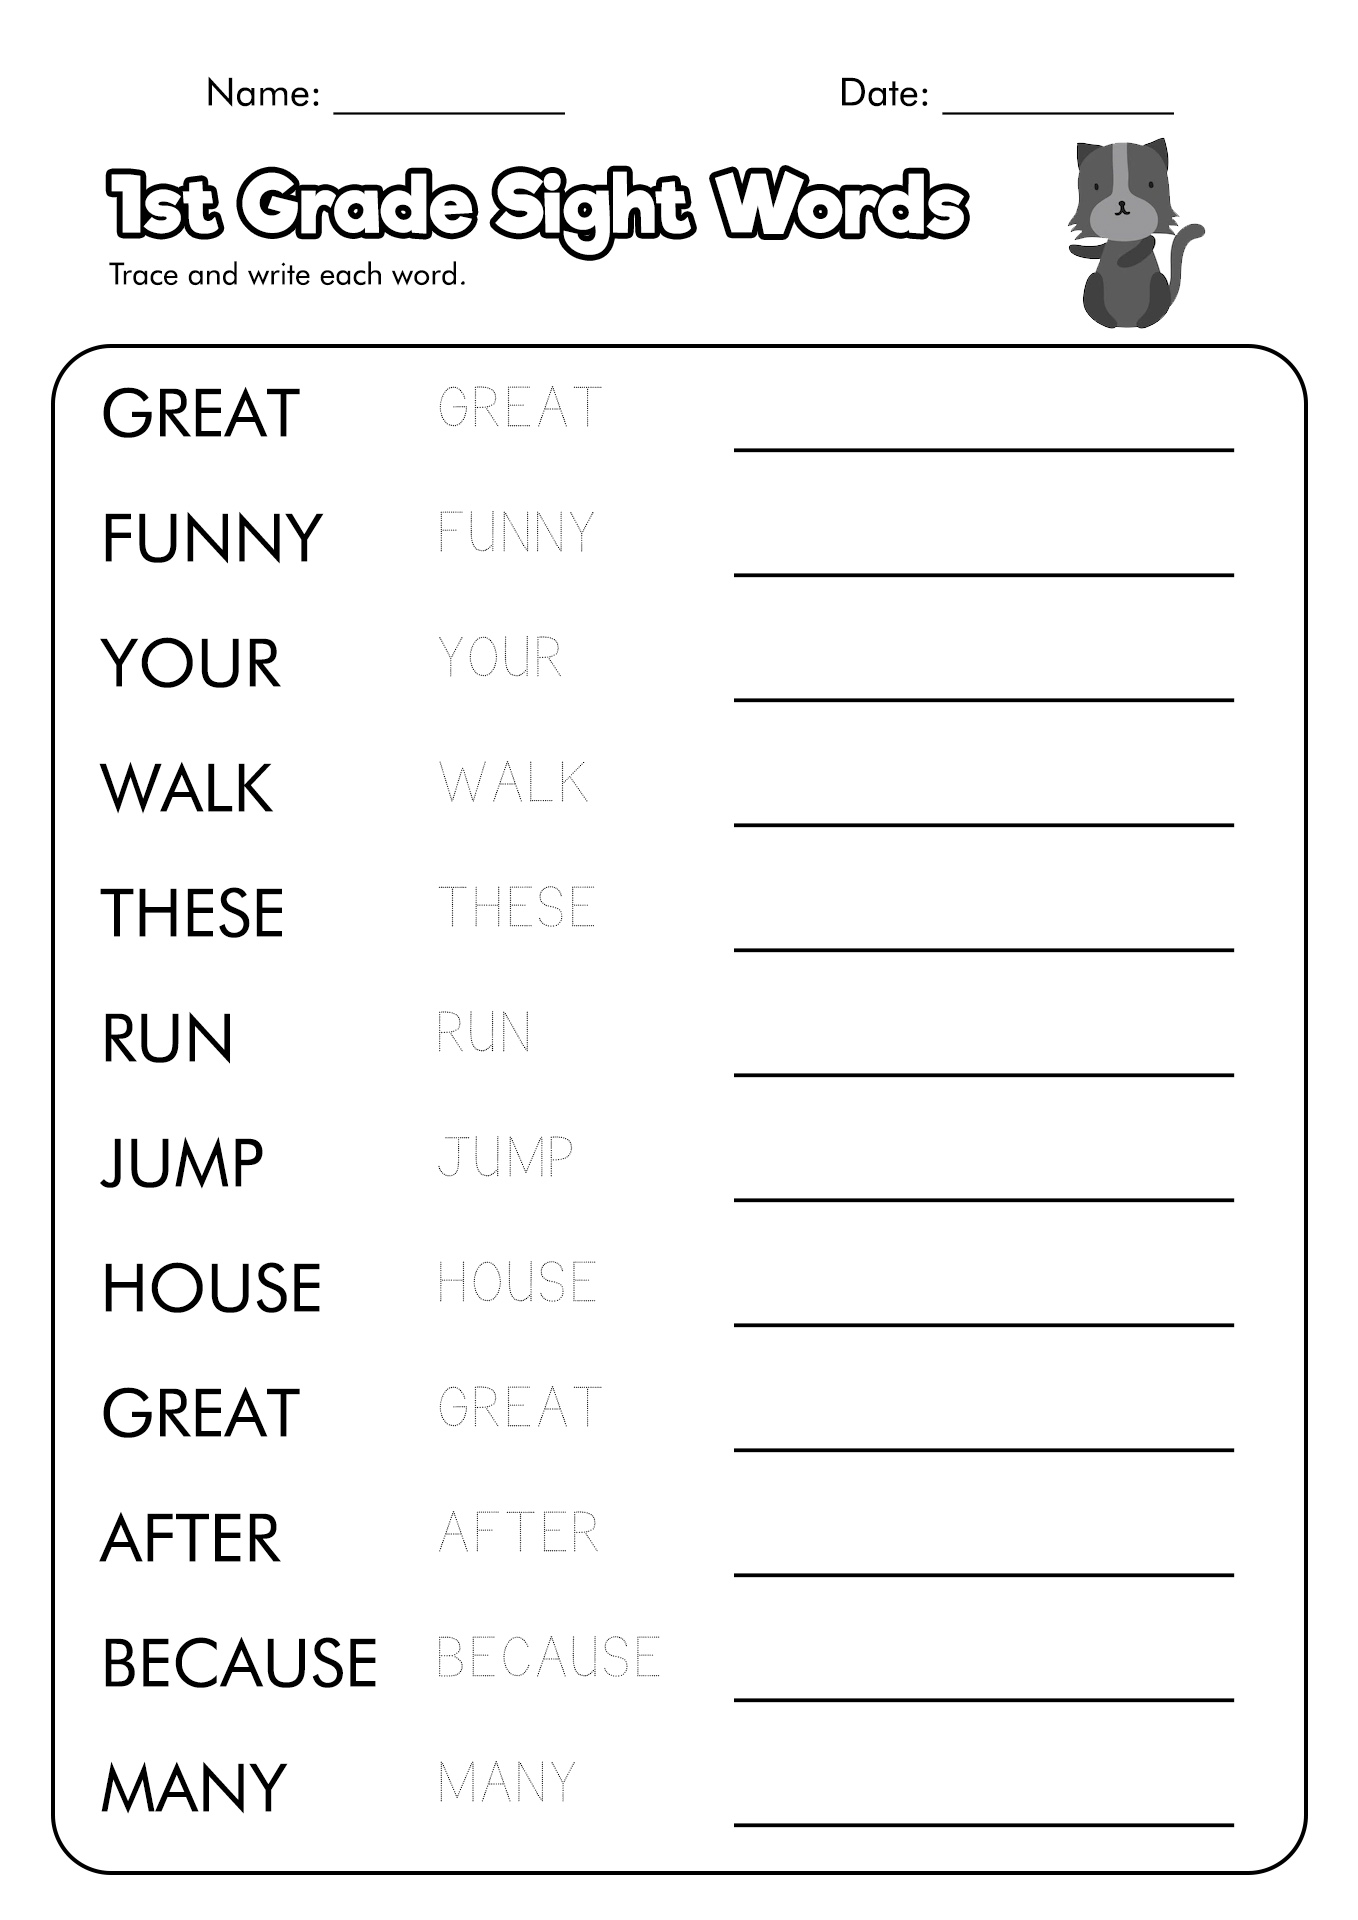 1st grade sight word worksheets